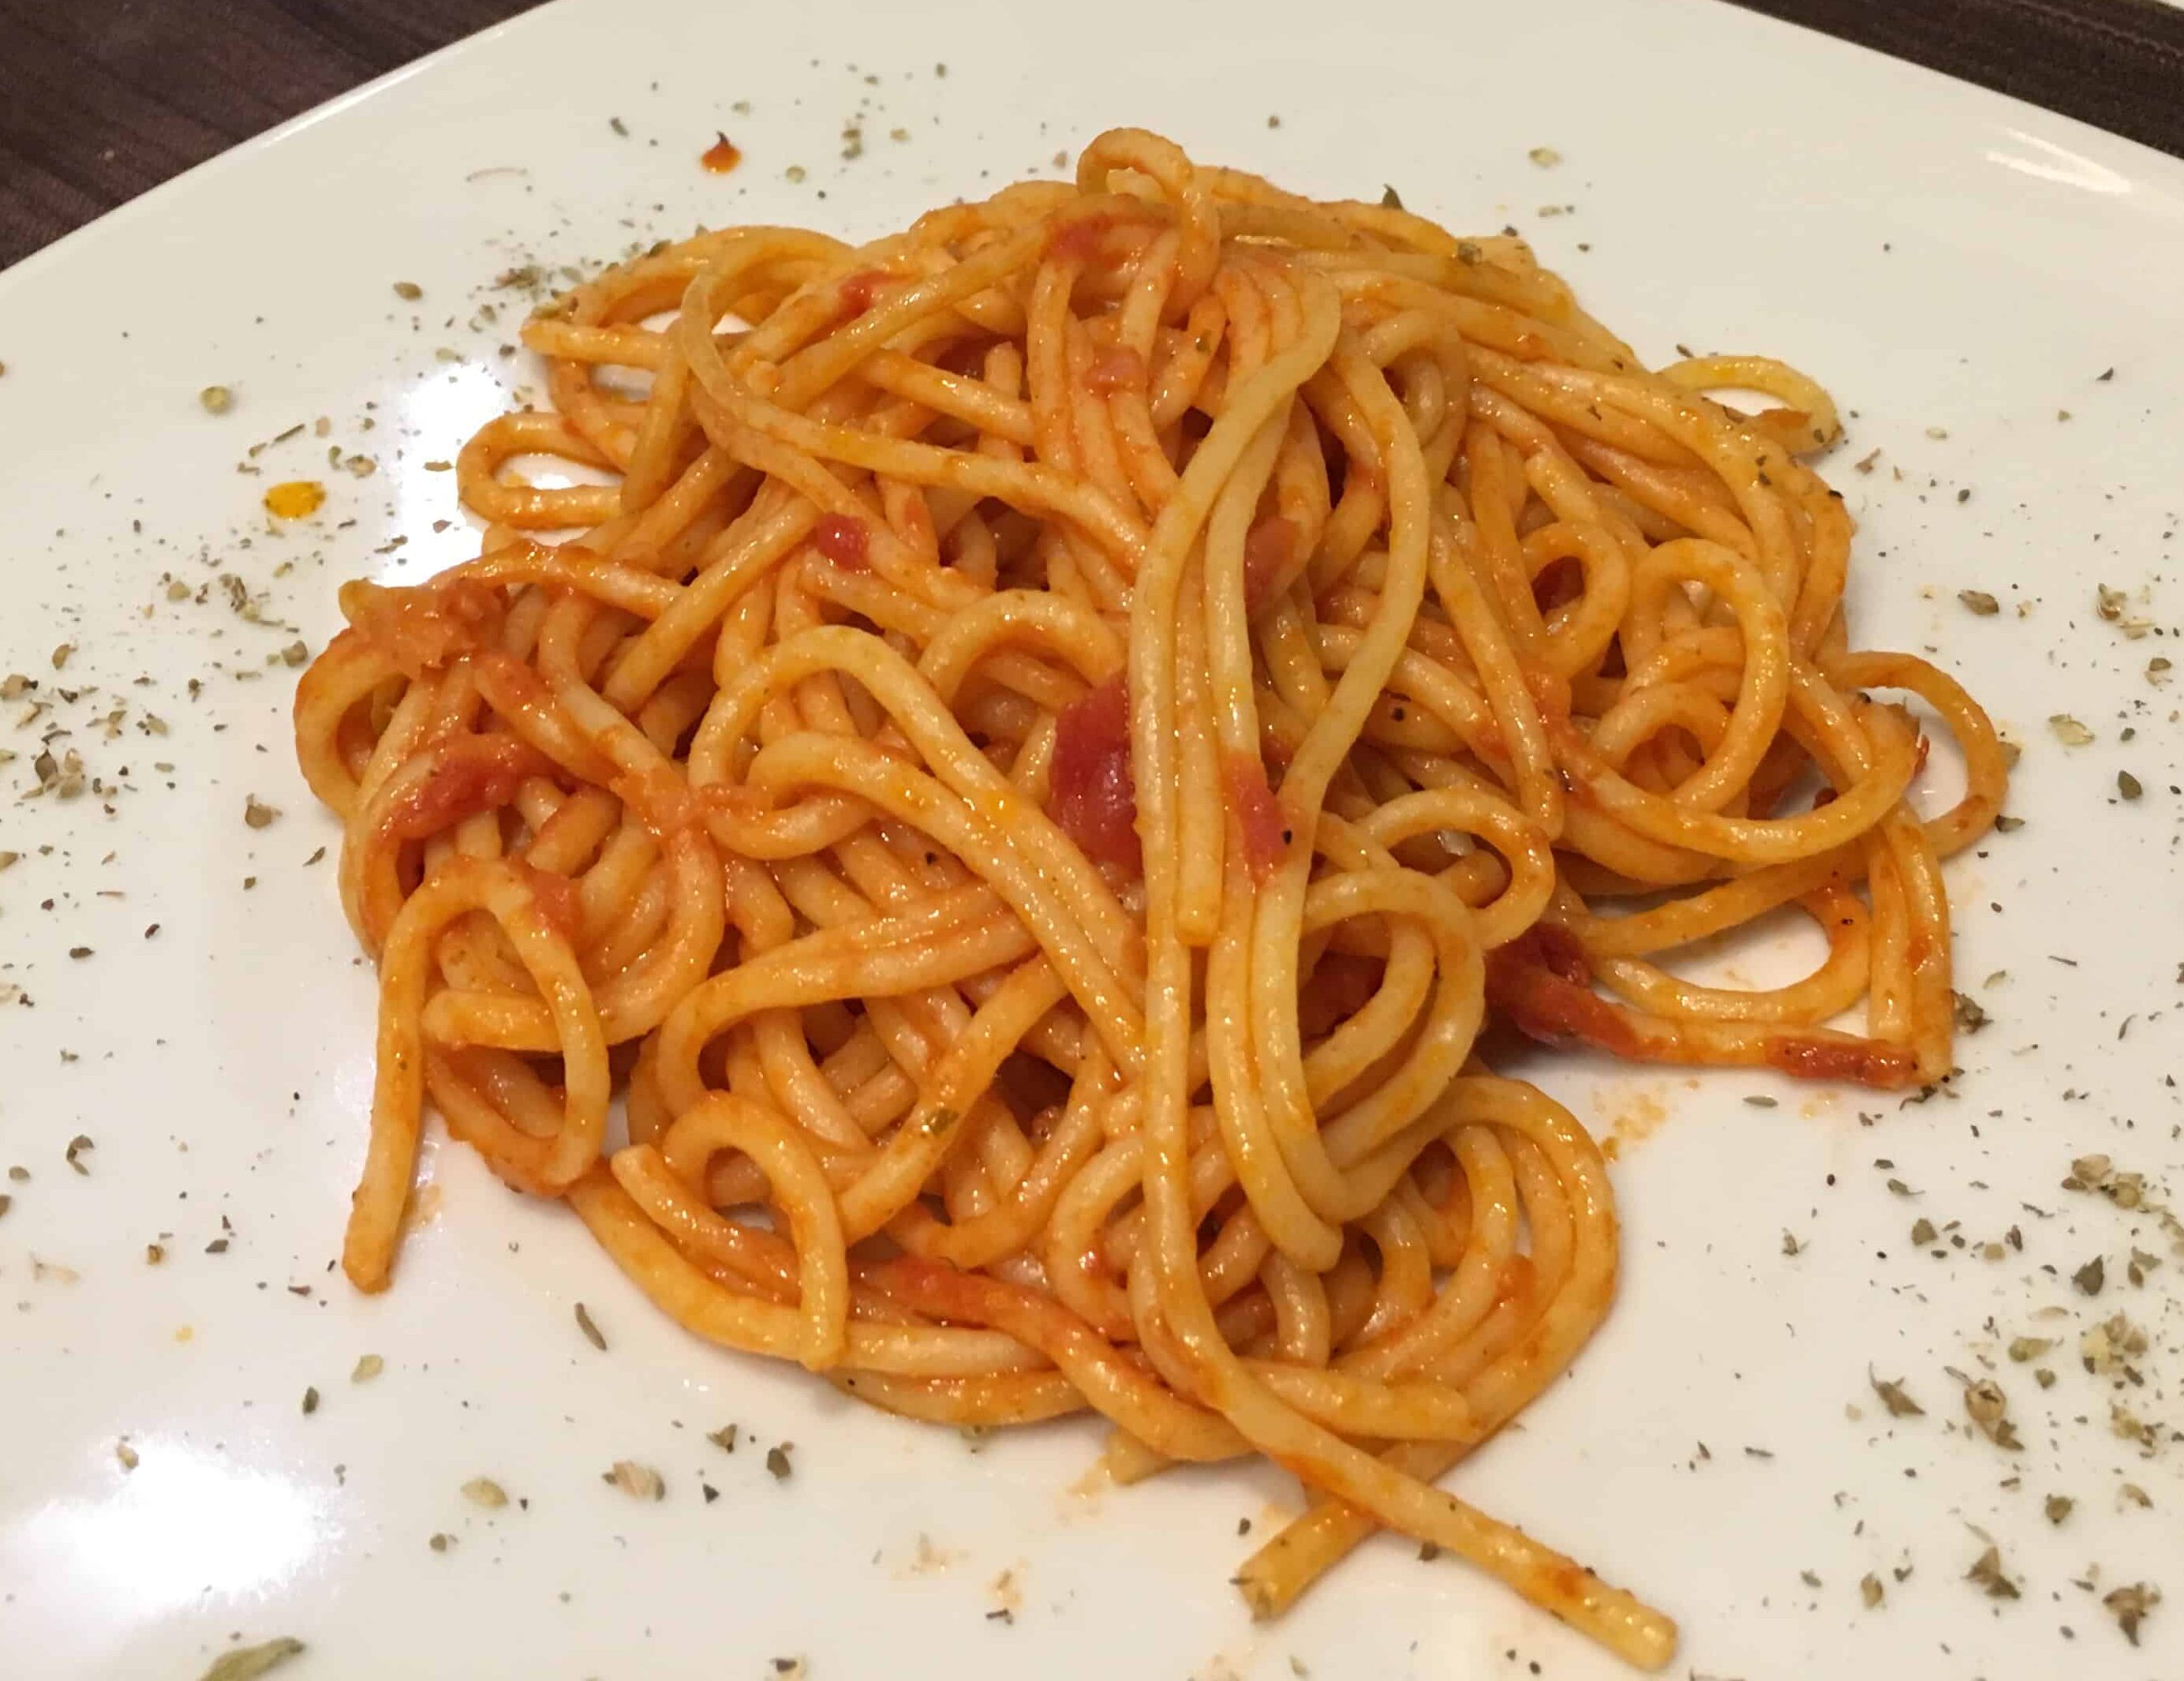 Spaghetti at Accademia Caffè